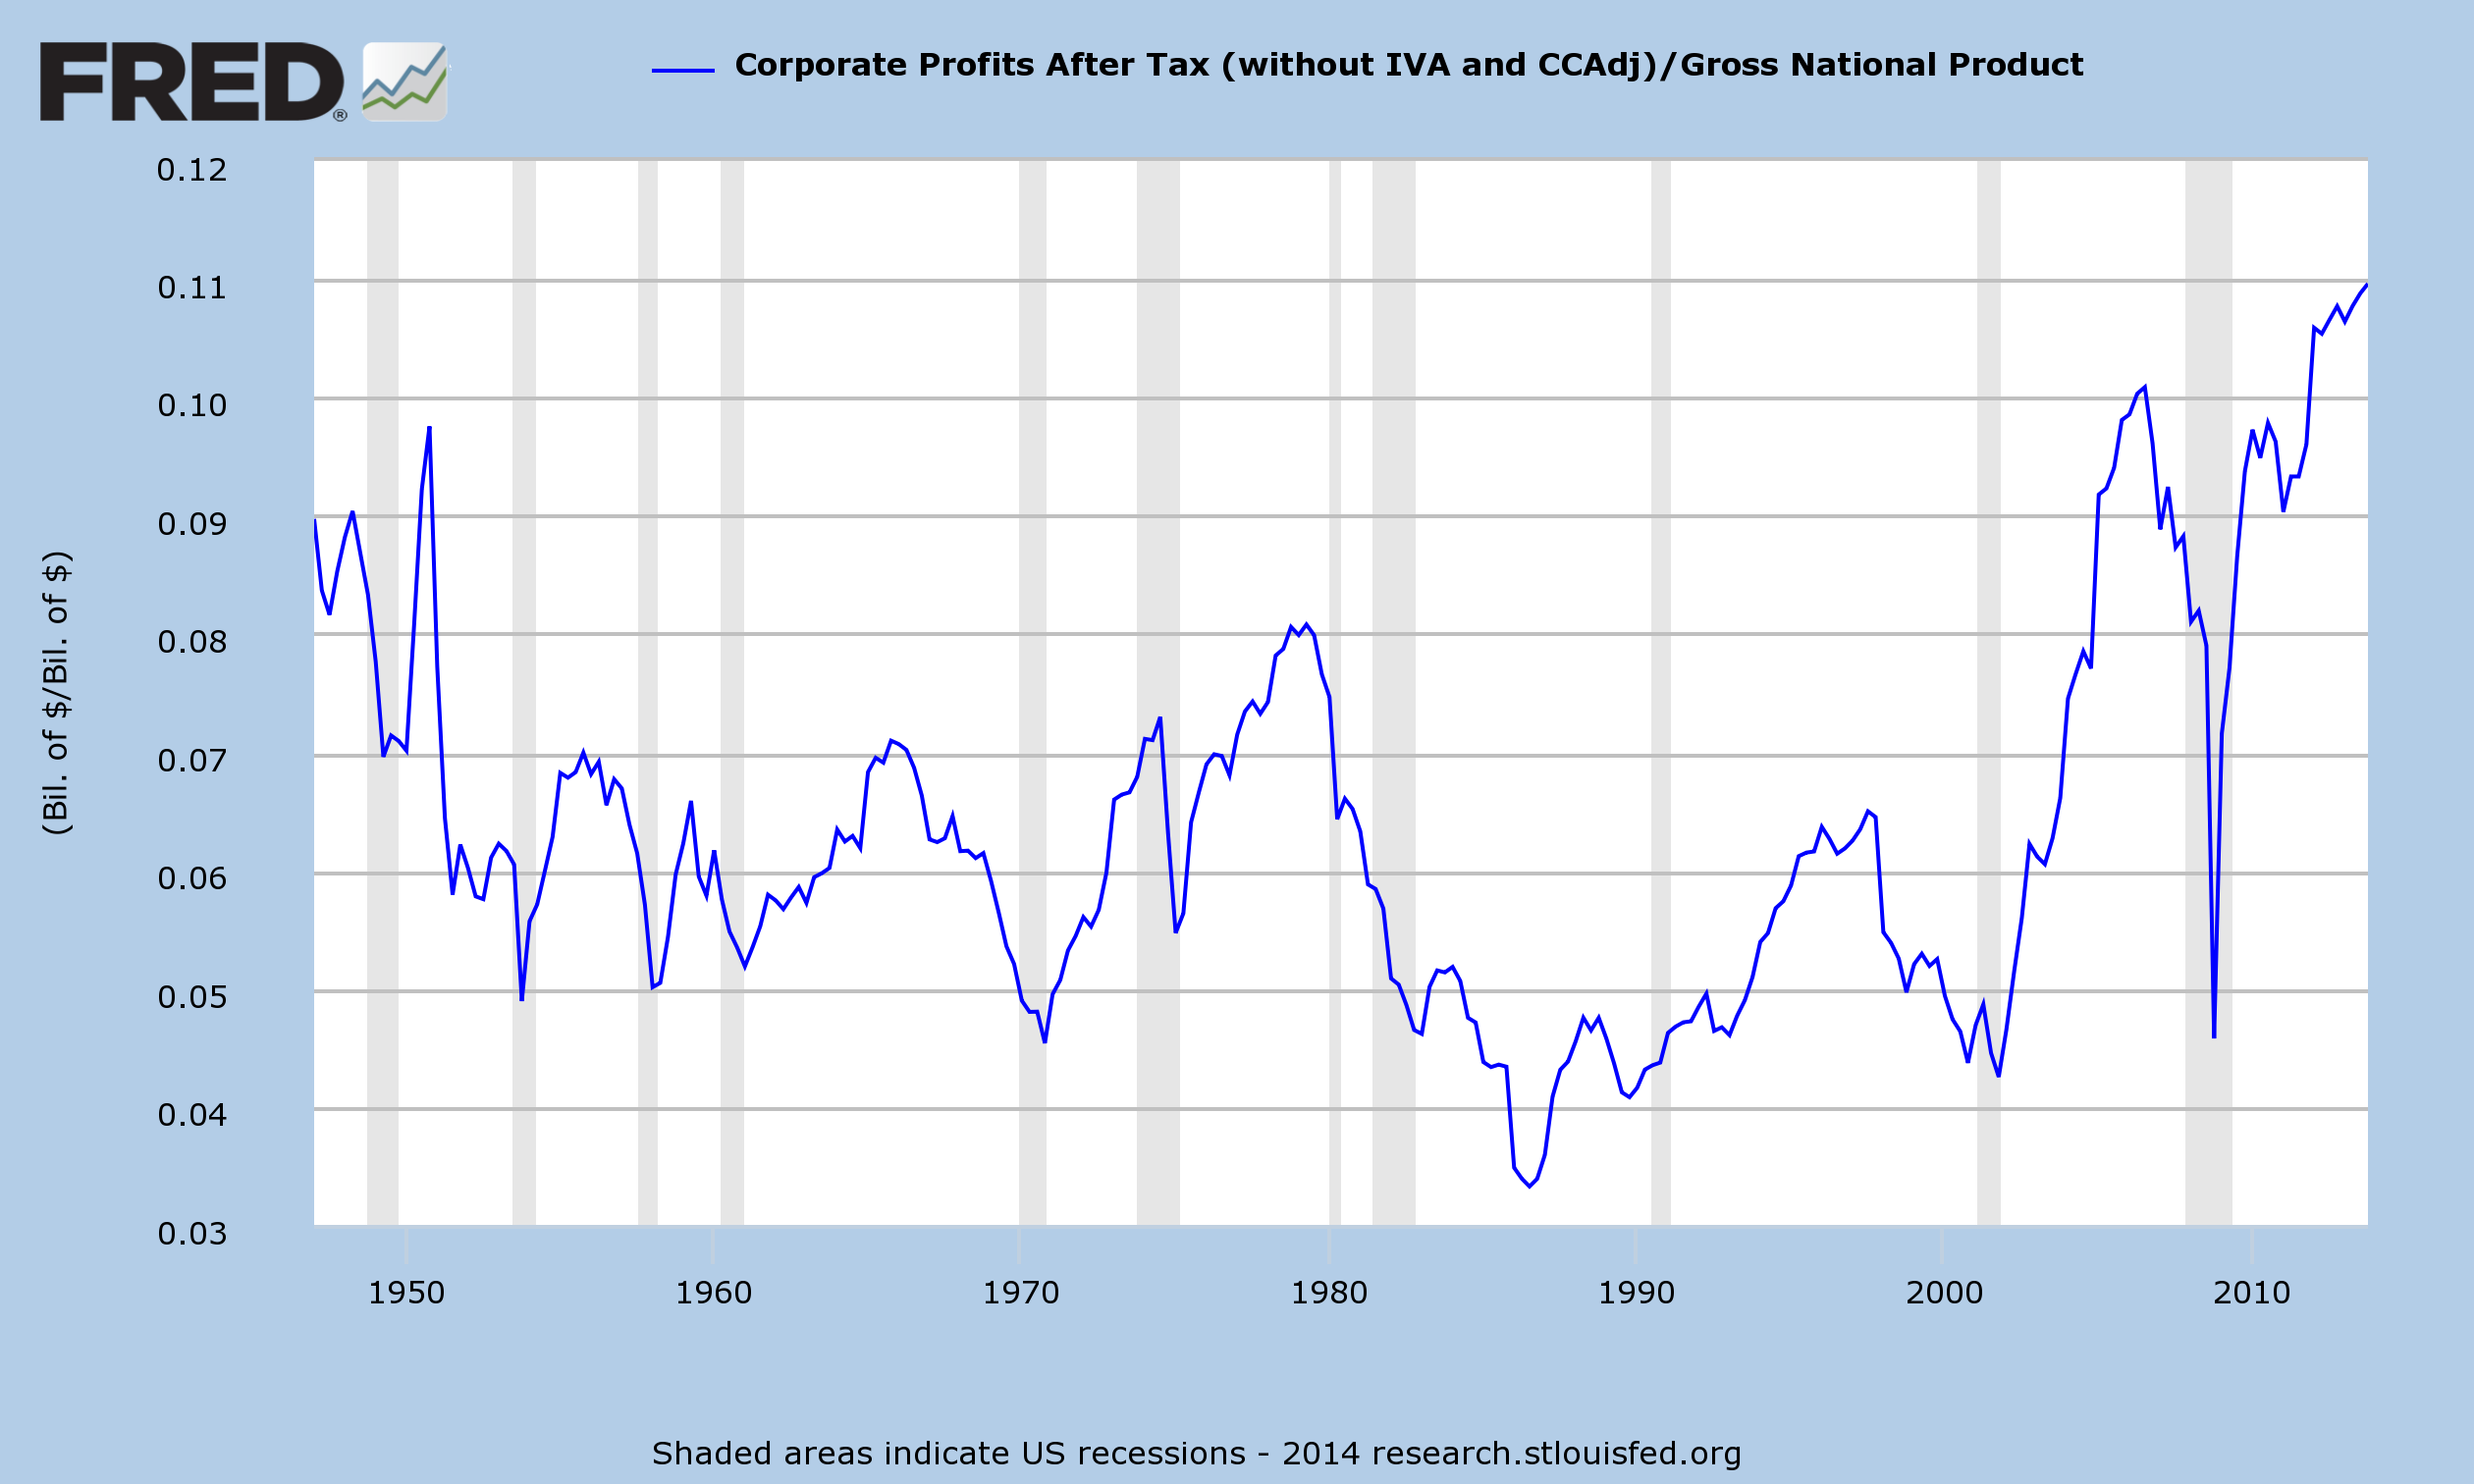 Corporate Profits/GNP